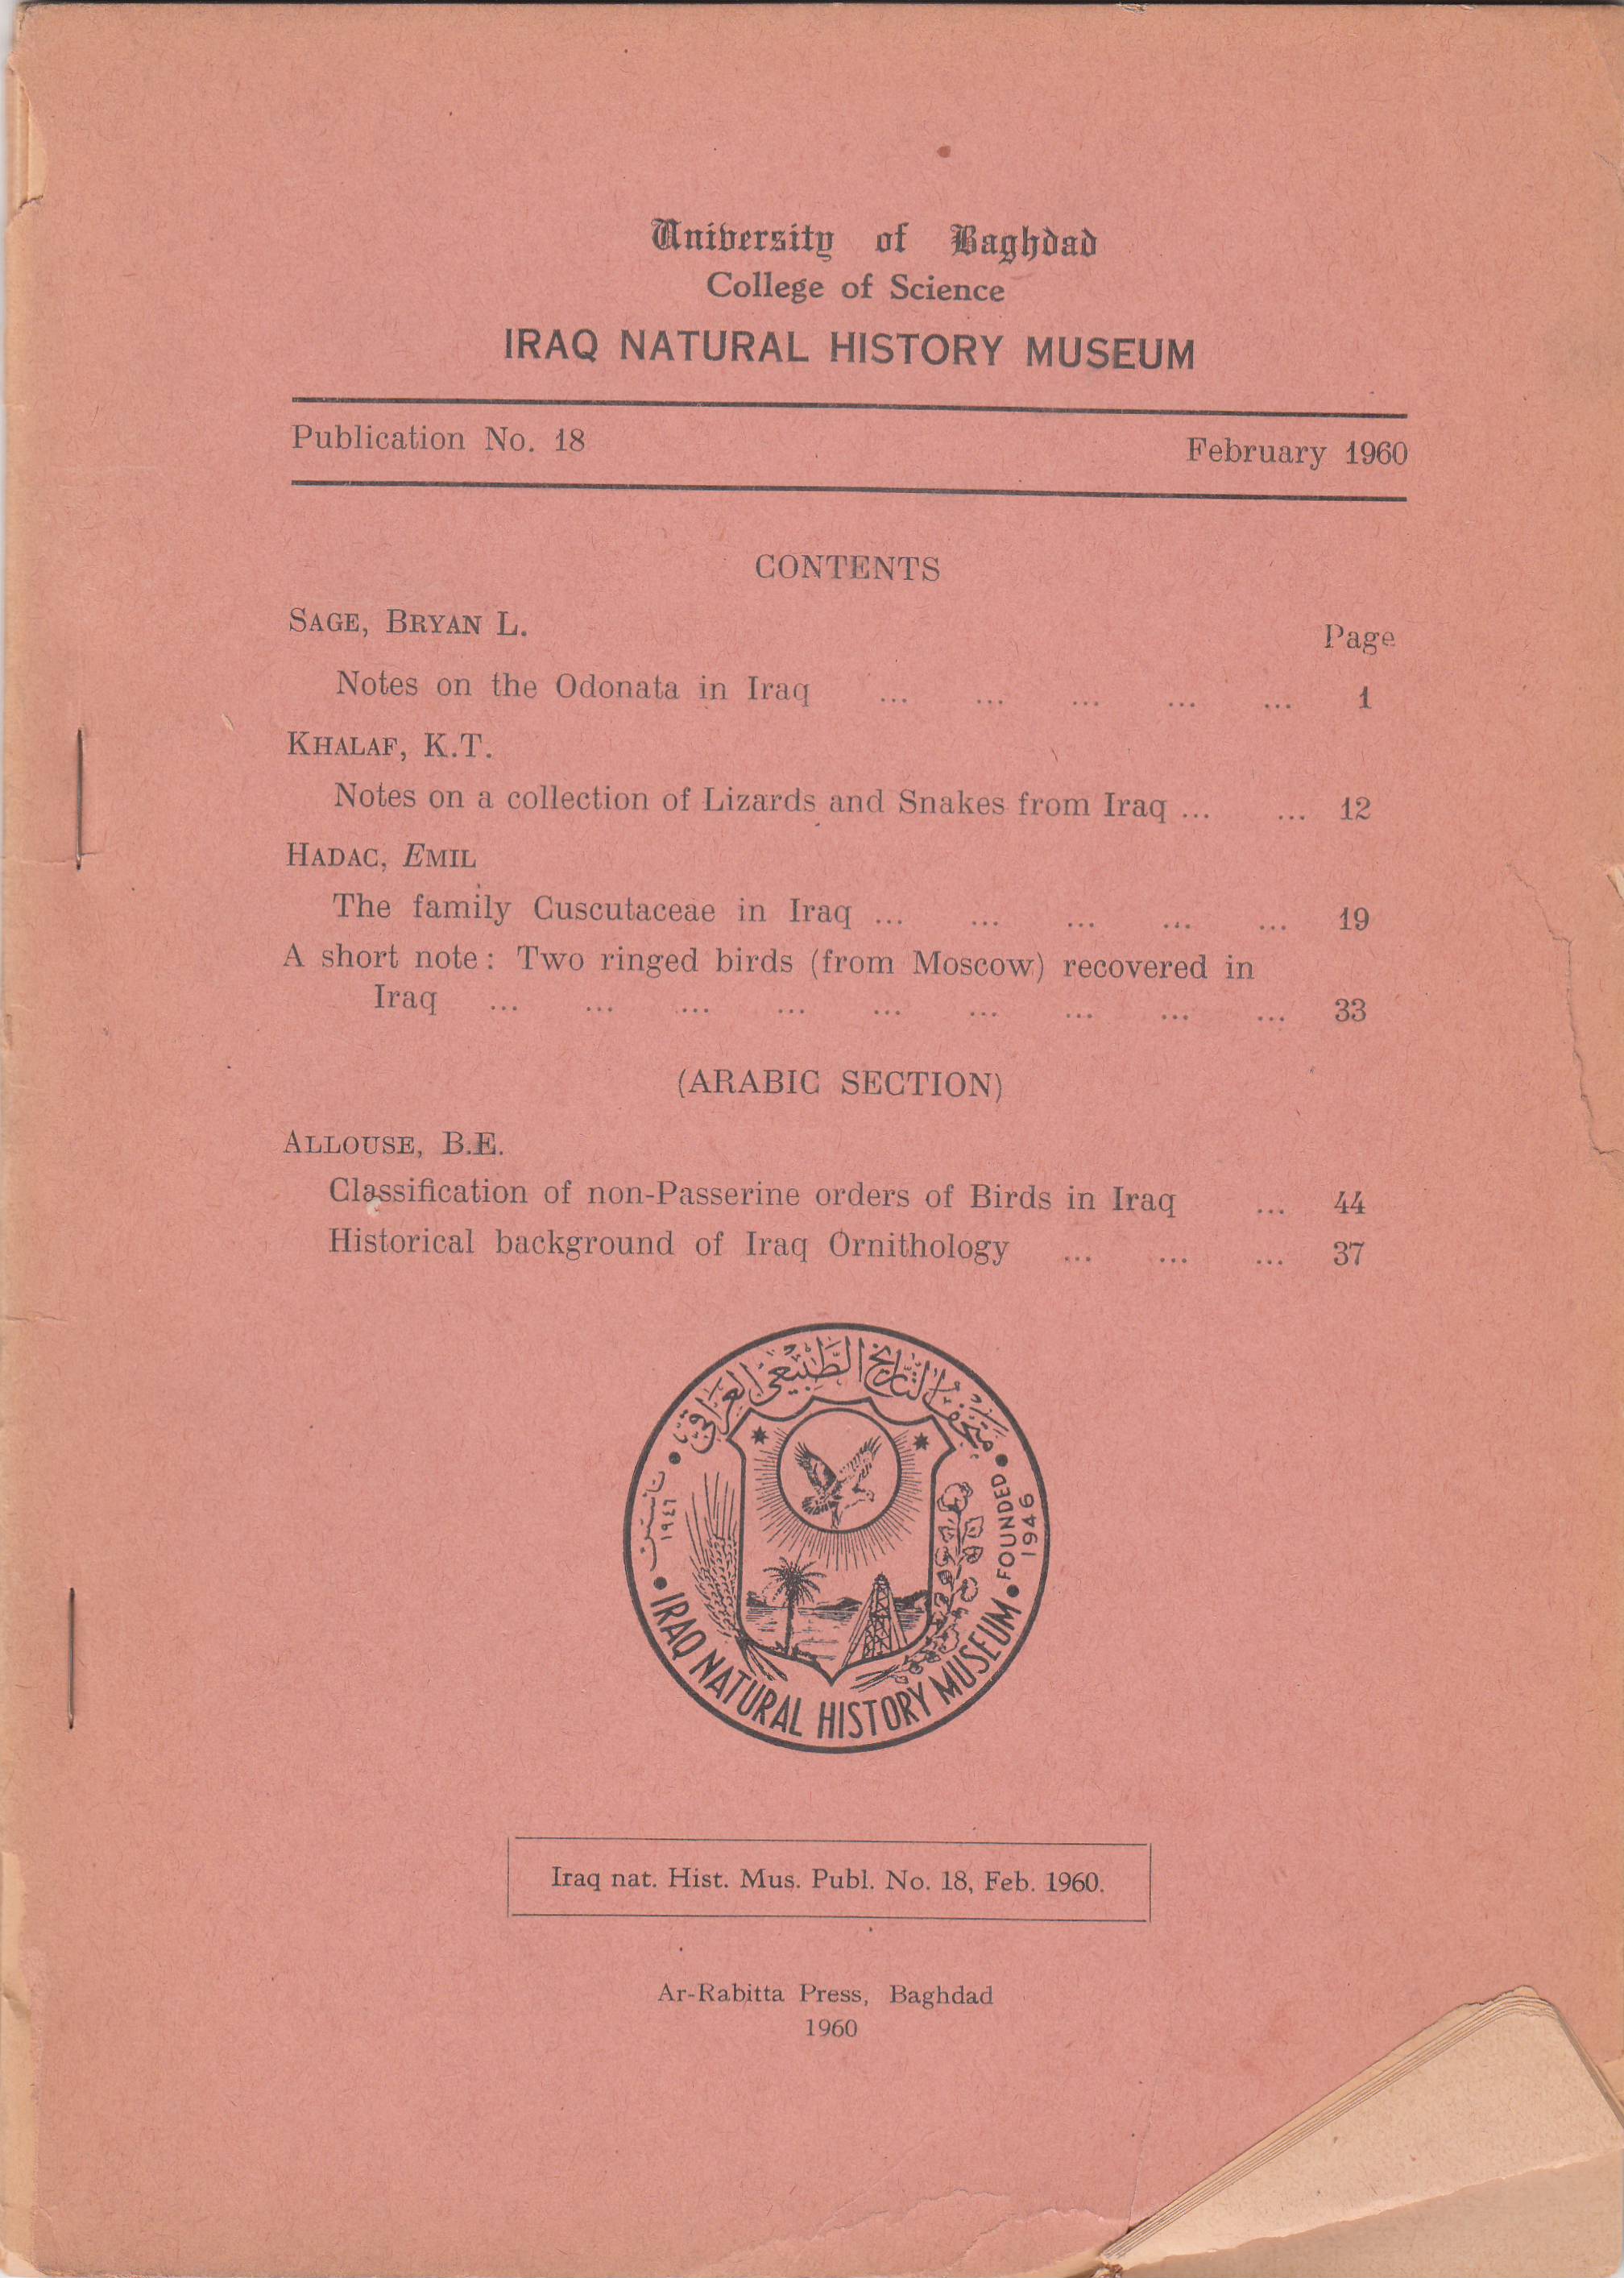 					معاينة عدد 18 (1960):  Notes on a collection of Lizards and Snakes from Iraq by KHALAF, K.T. p;12
				